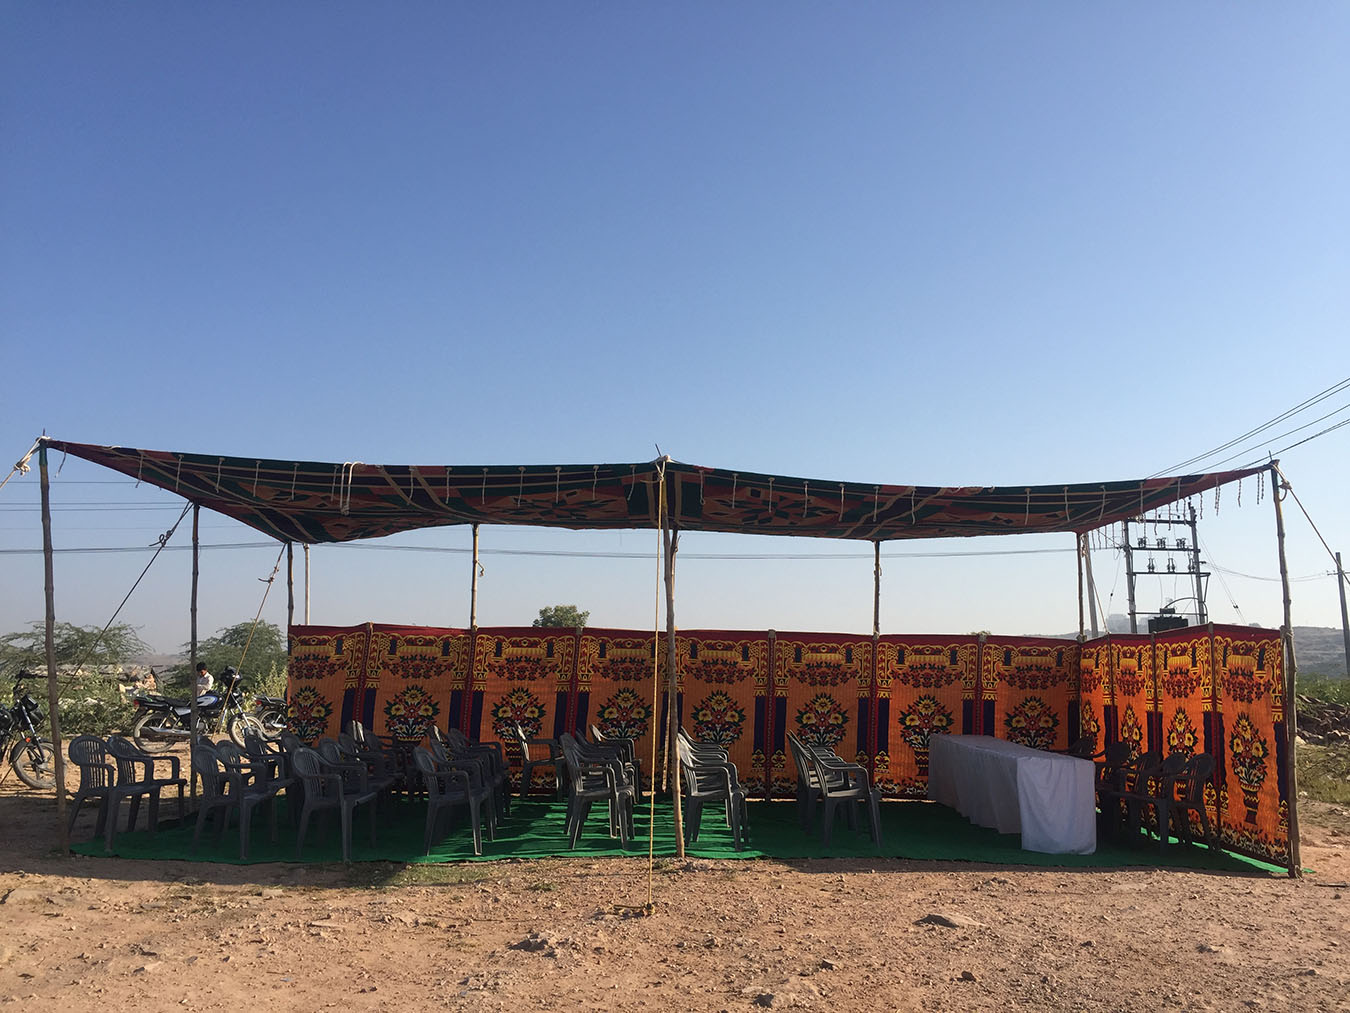 Tent Setup for Members of Parliament on Citizenship Amendment Bill Study Tour in Jodhpur, 2016. Photo by Natasha Raheja.